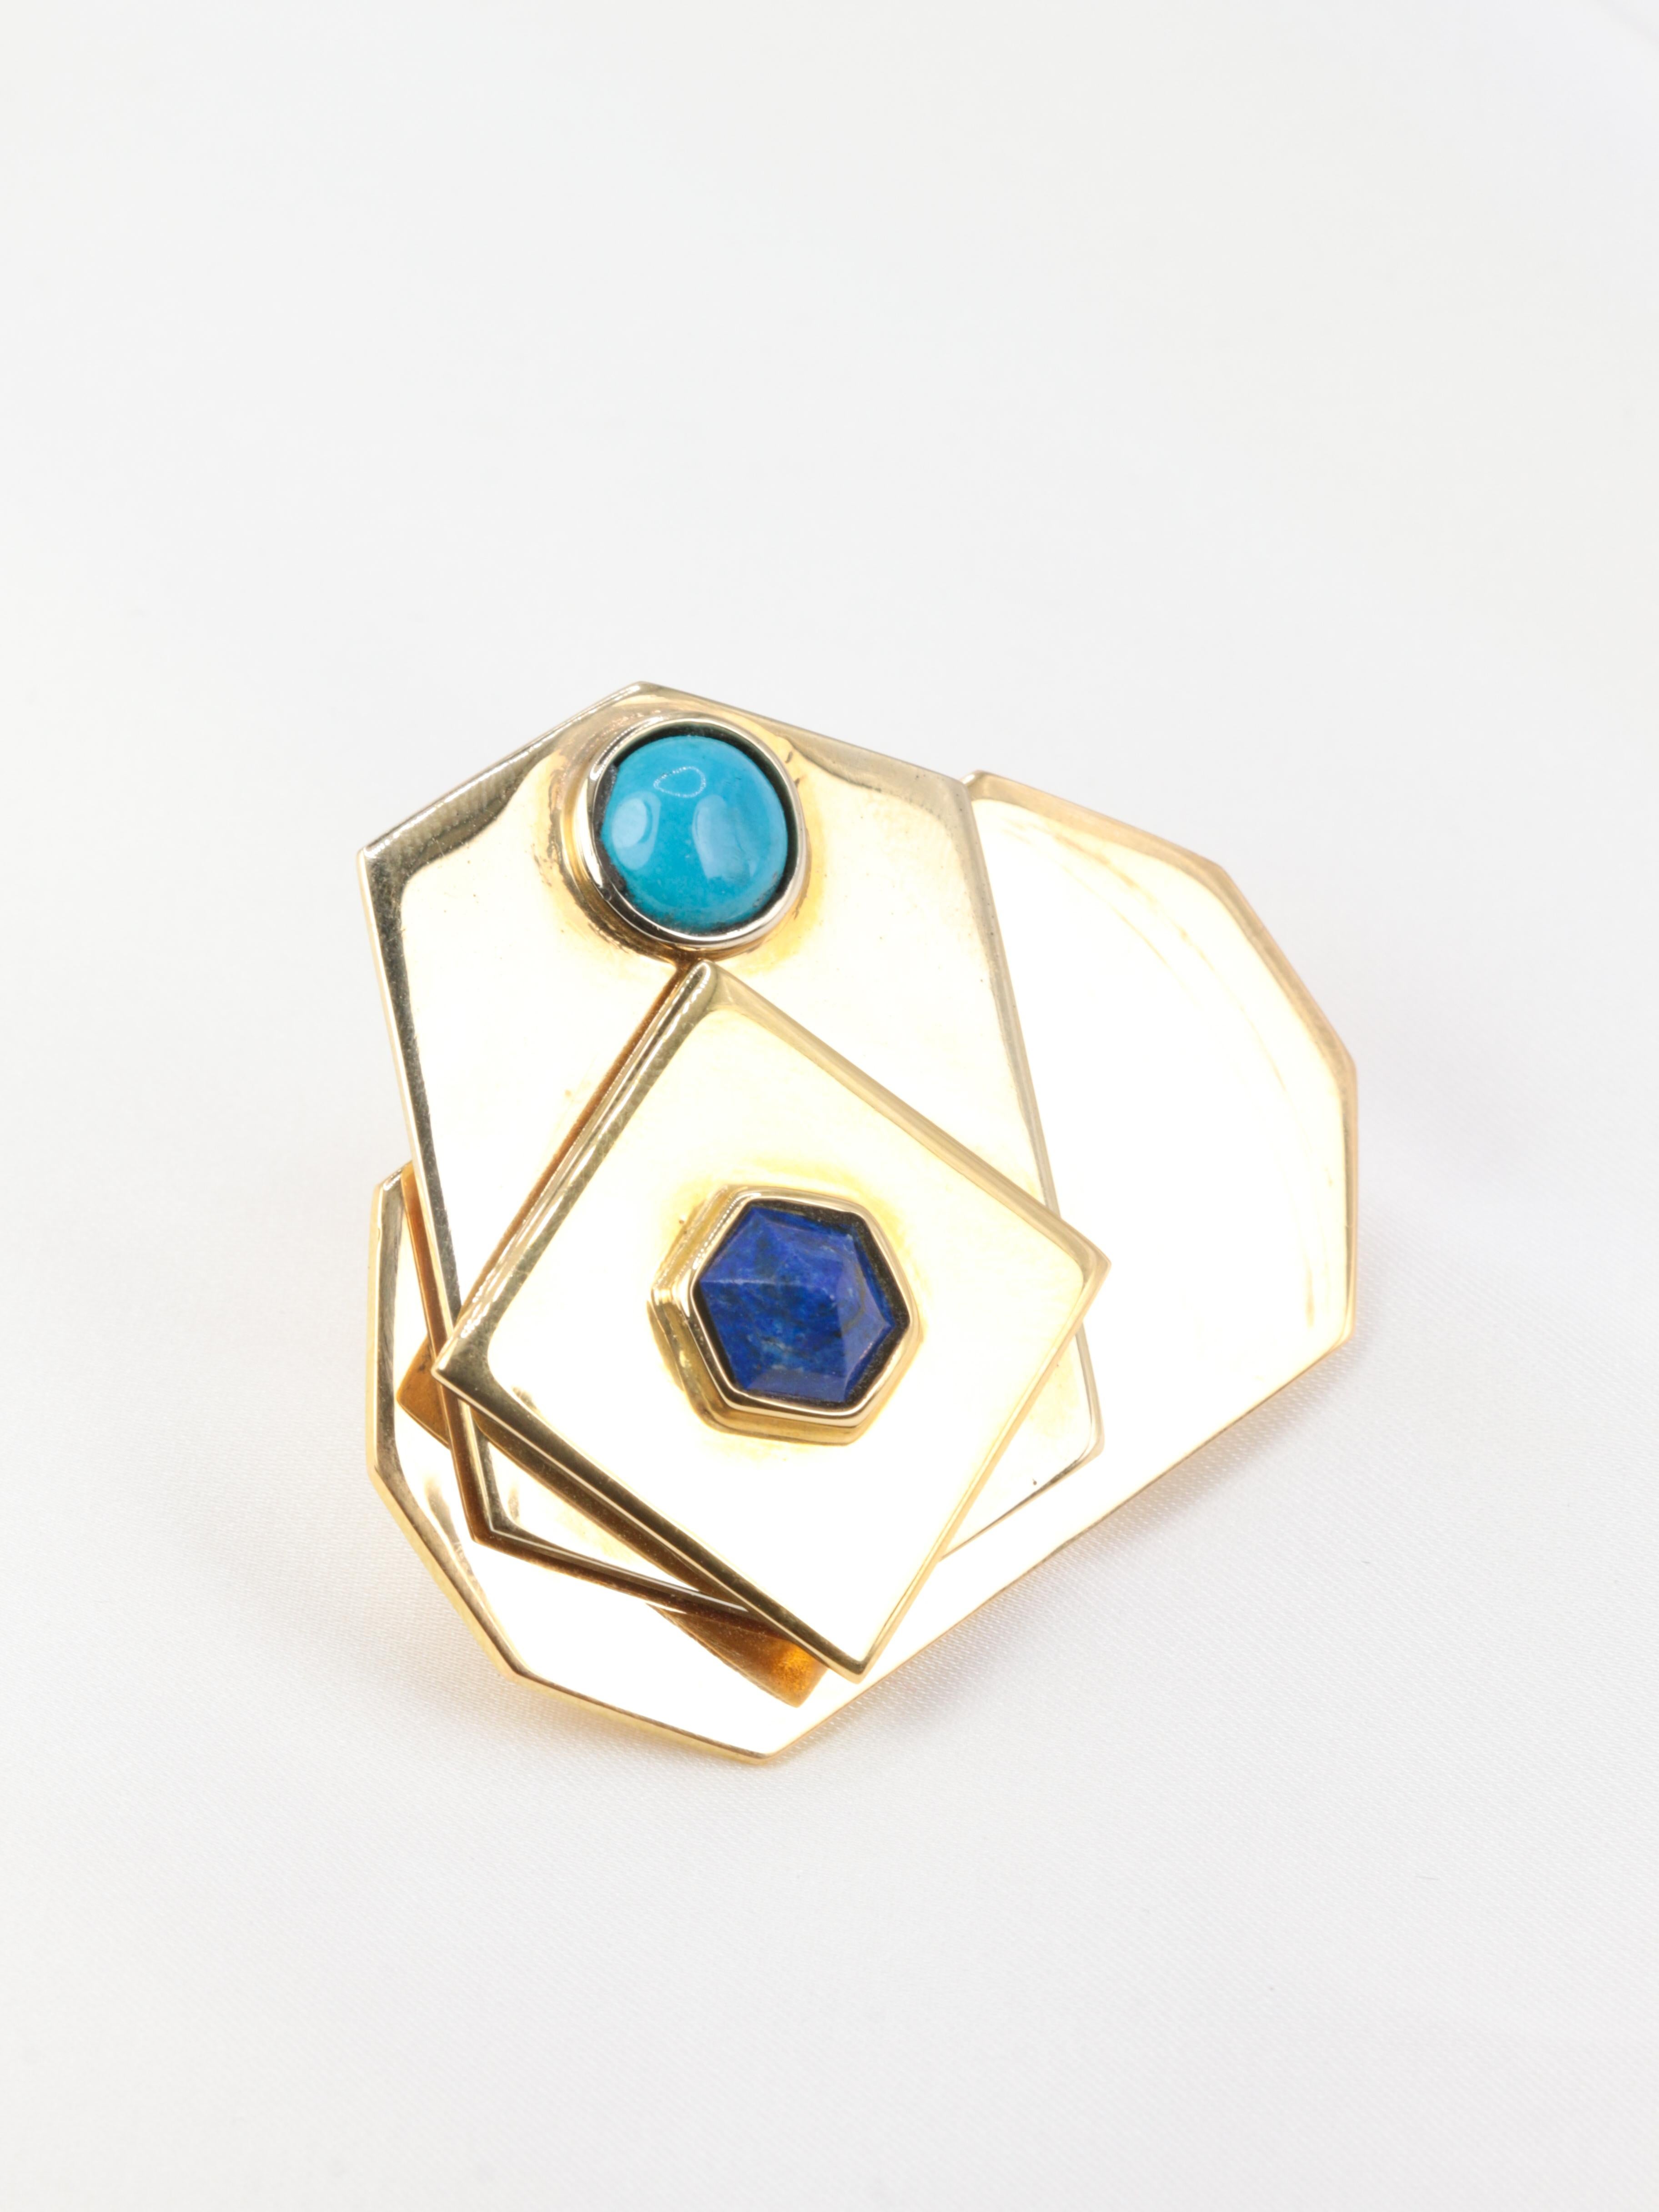 Piero Dorazio Vintage Brooch in Gold, Turquoise and Lapis Lazuli - Artcurial Edi For Sale 4